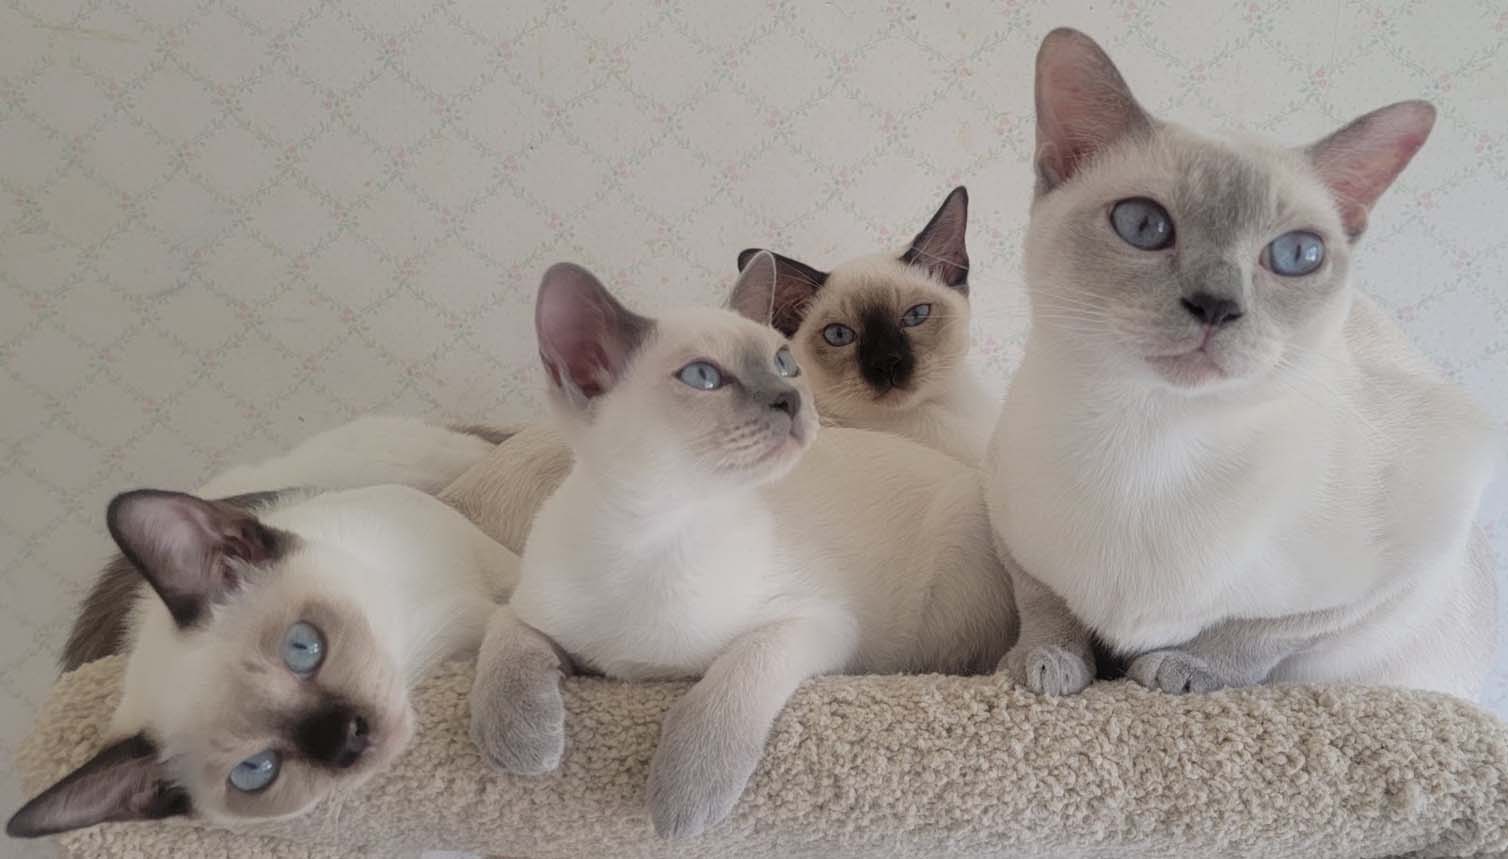 Lulu and & Her Lovely Kittens